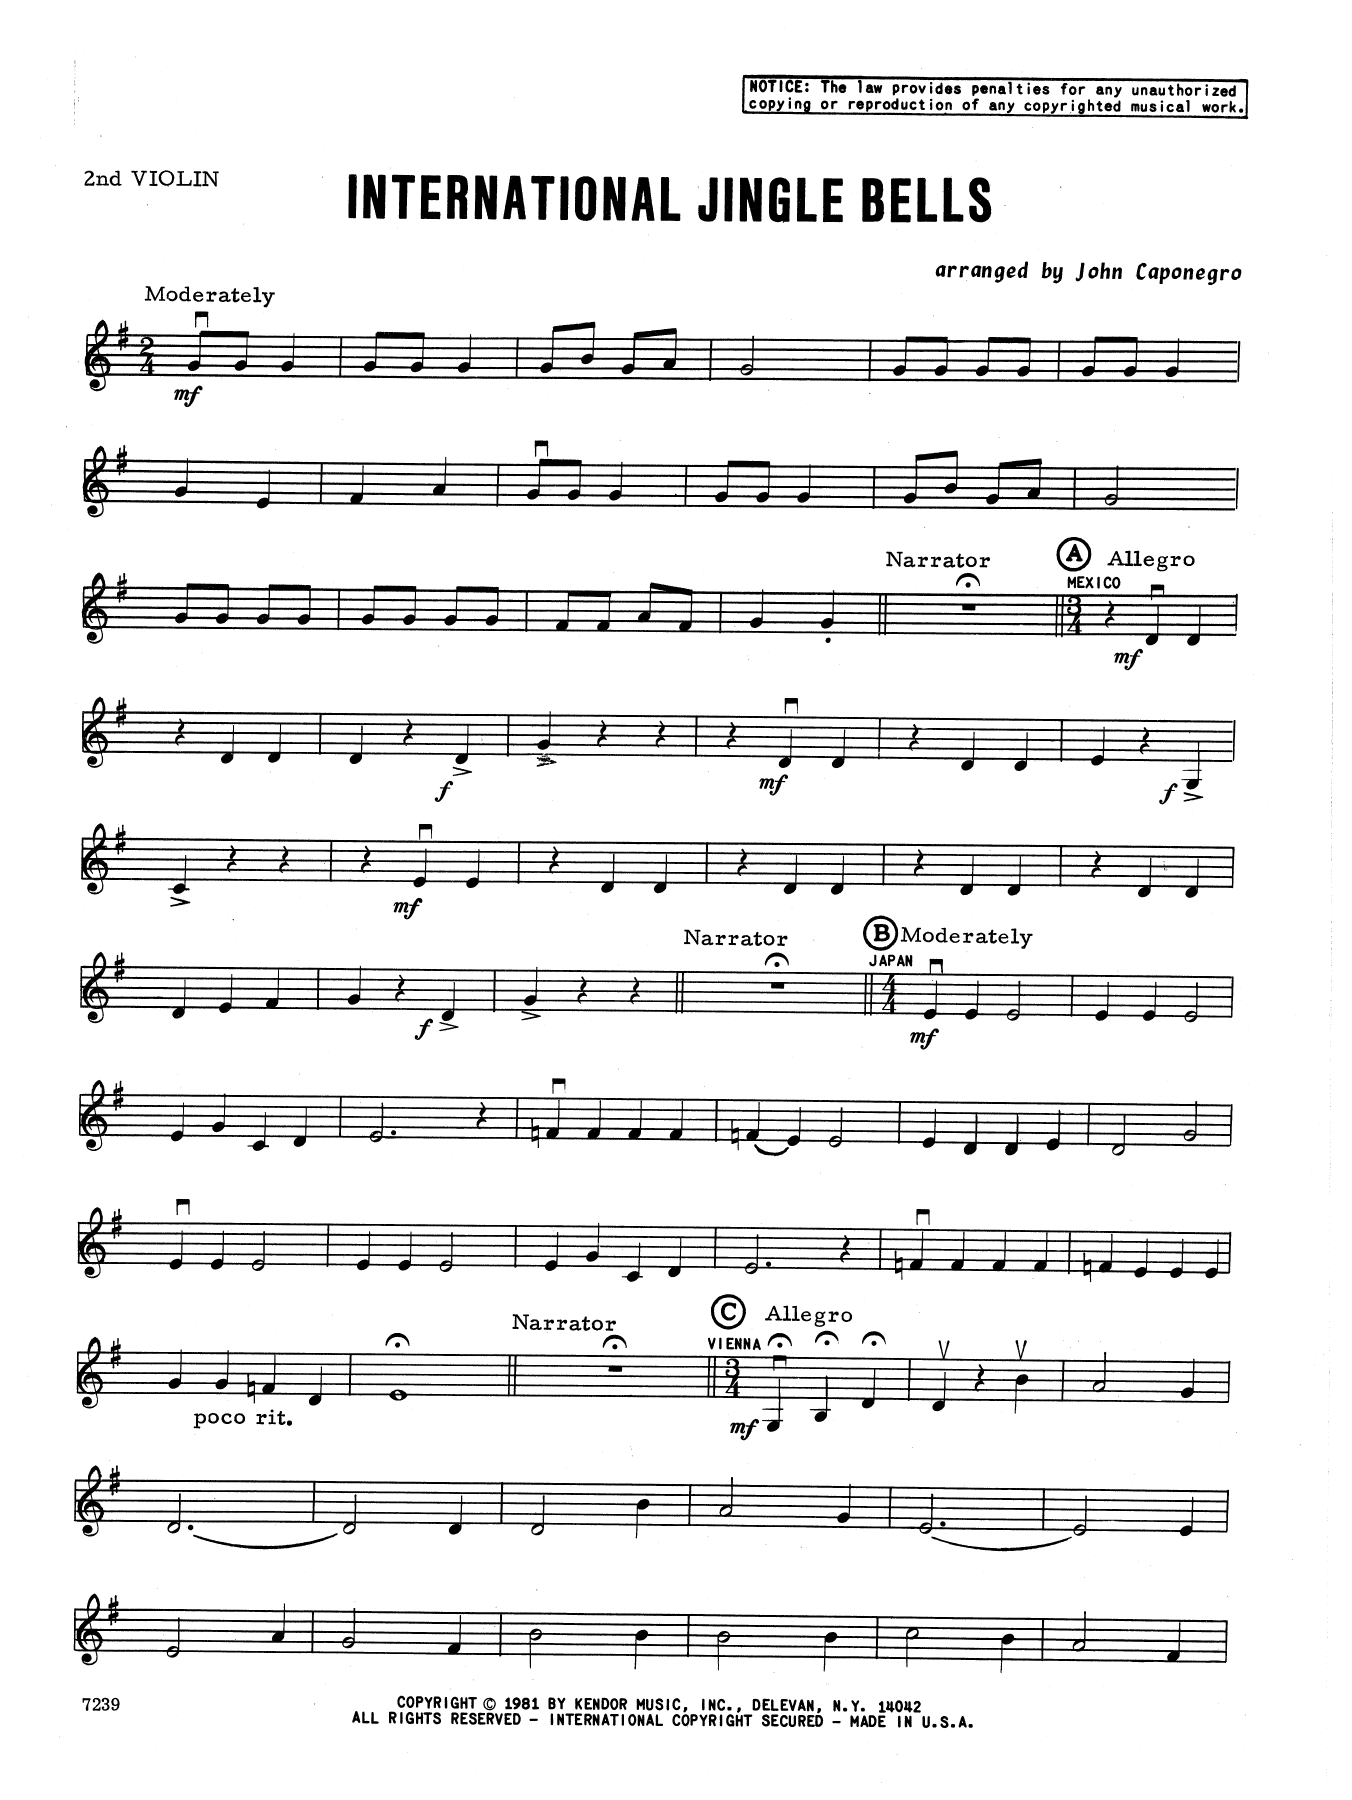 International Jingle Bells - 2nd Violin (Orchestra) von John Caponegro